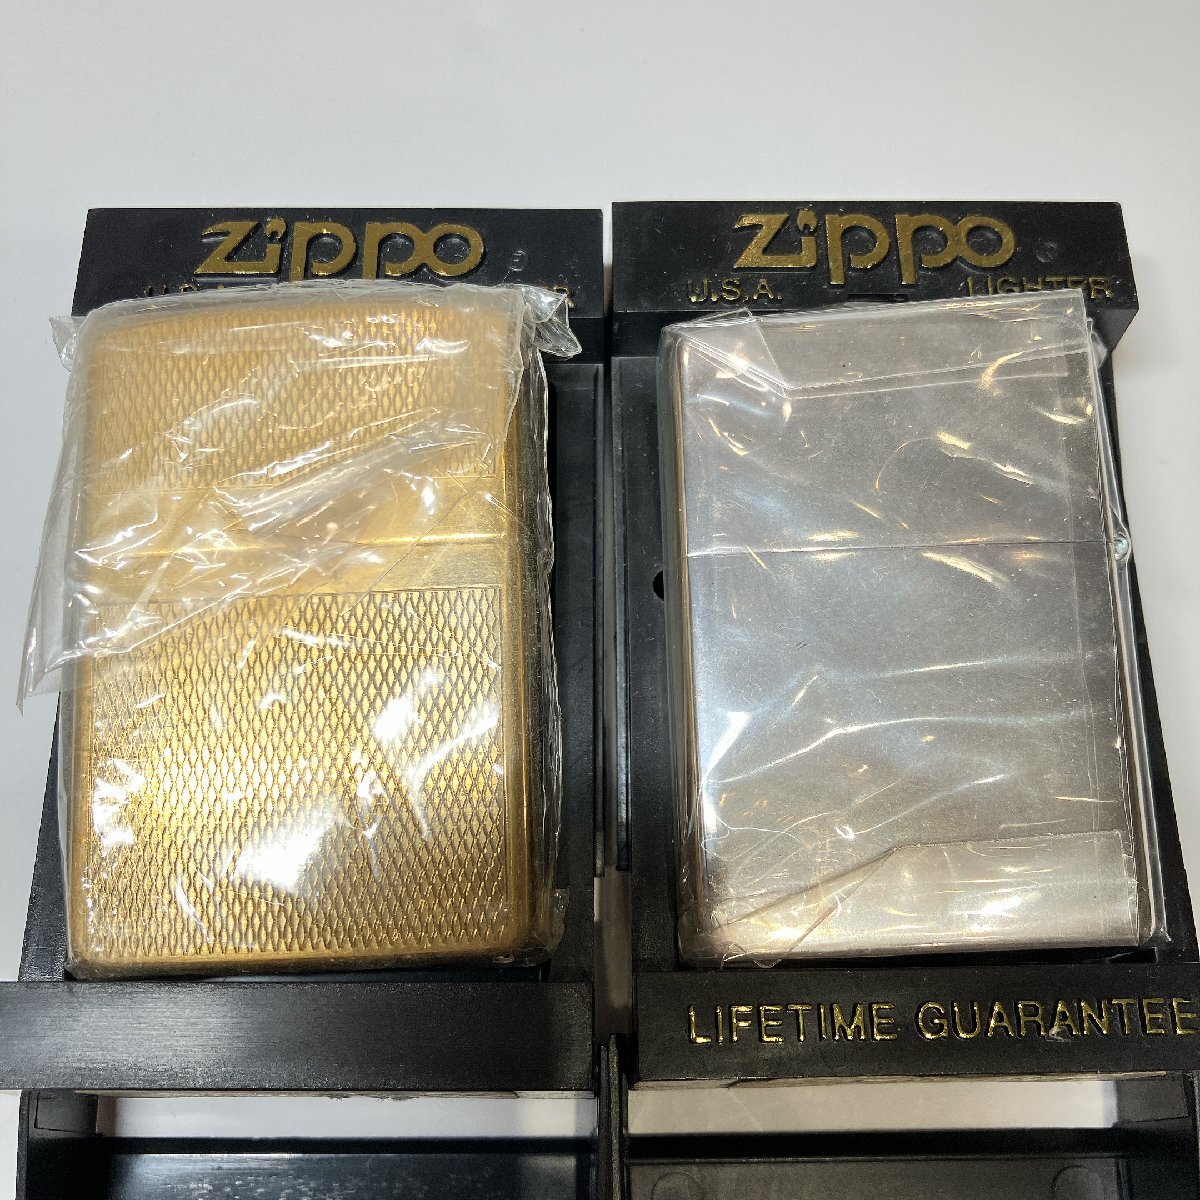 [1 jpy from ]ZIPPO ZiPPO Zippo Zippo - new goods unused not yet arrived fire rare lighter smoking . dolphin flower hibiscus 